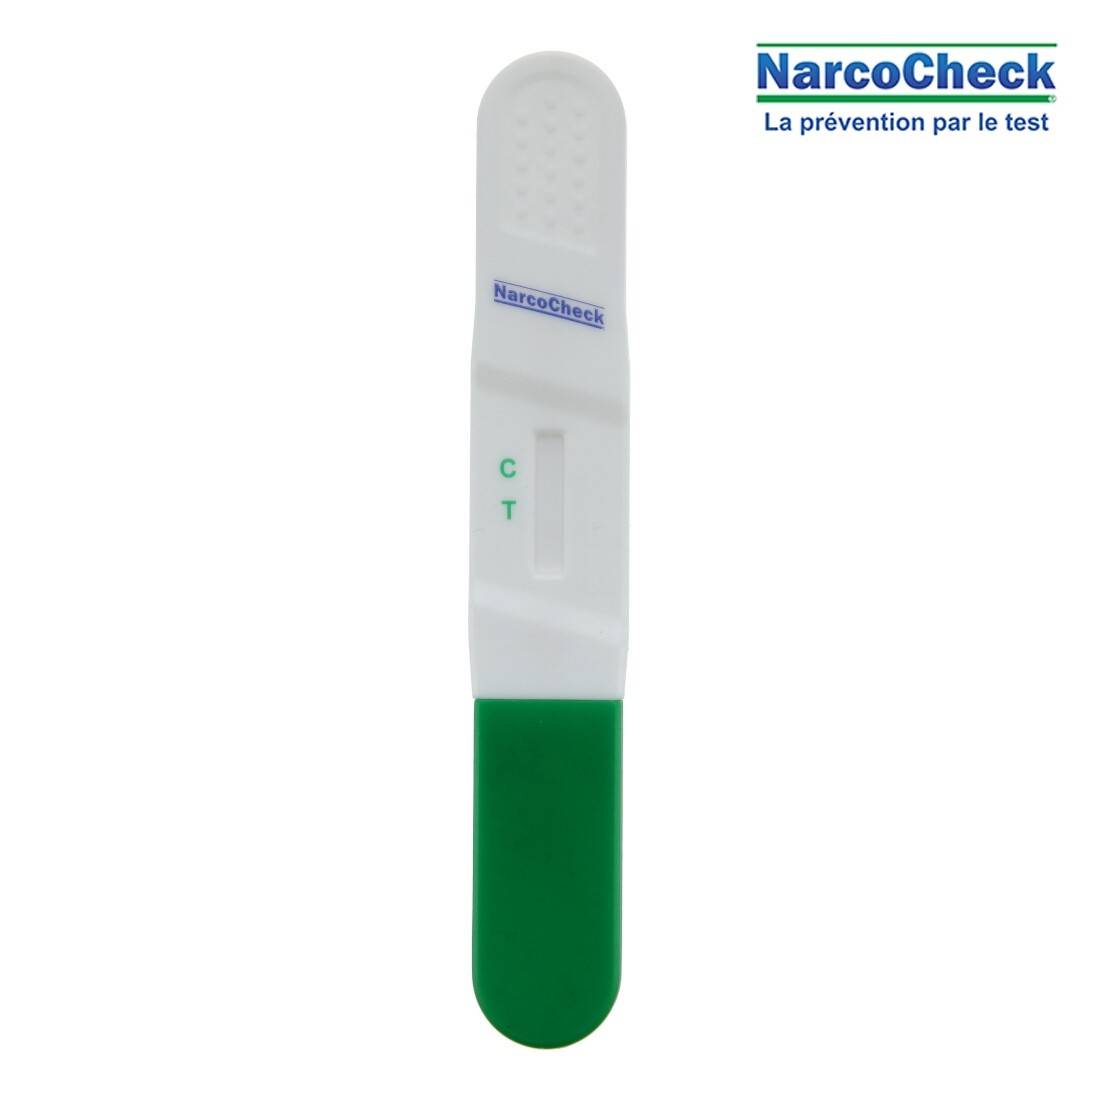 test salivaire cannabis - narcocheck - thc 